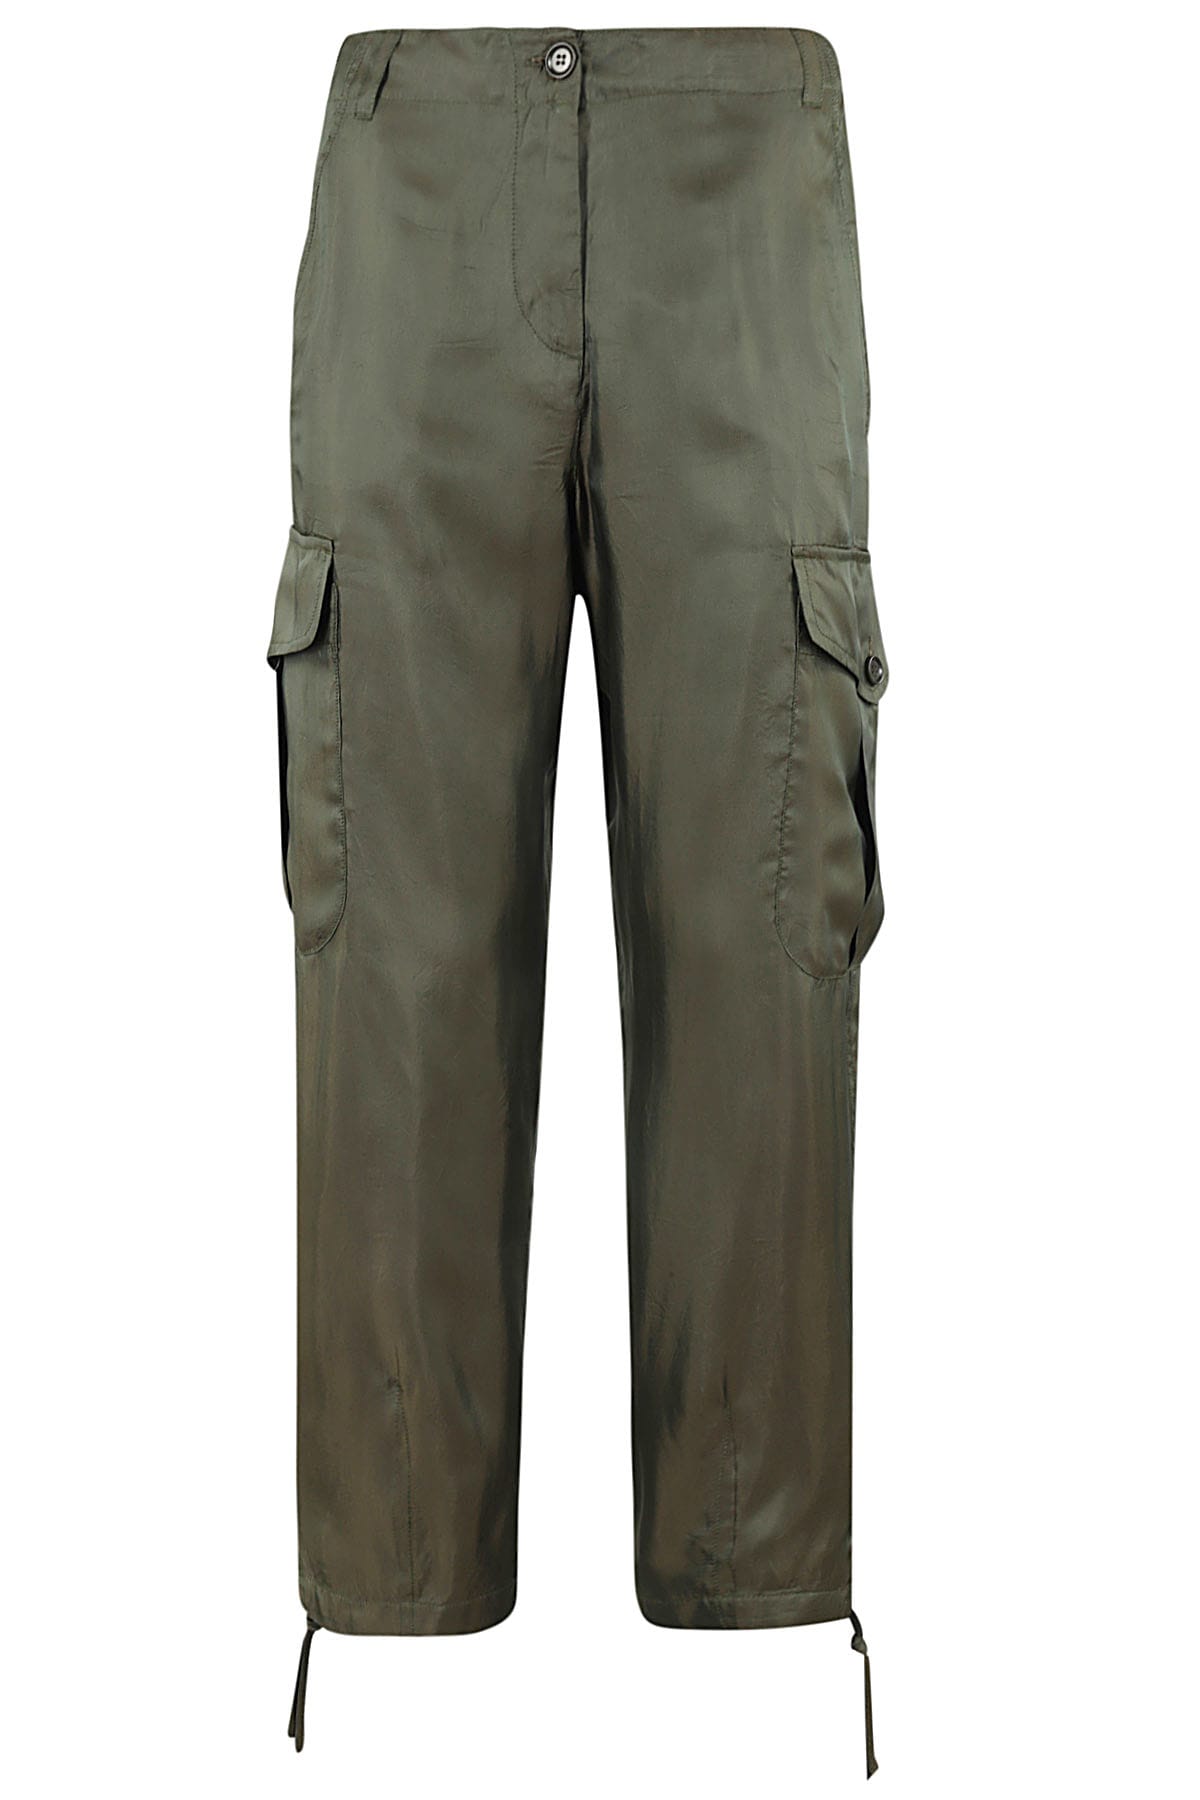 Aspesi Pantalone Mod 0169 In Militare